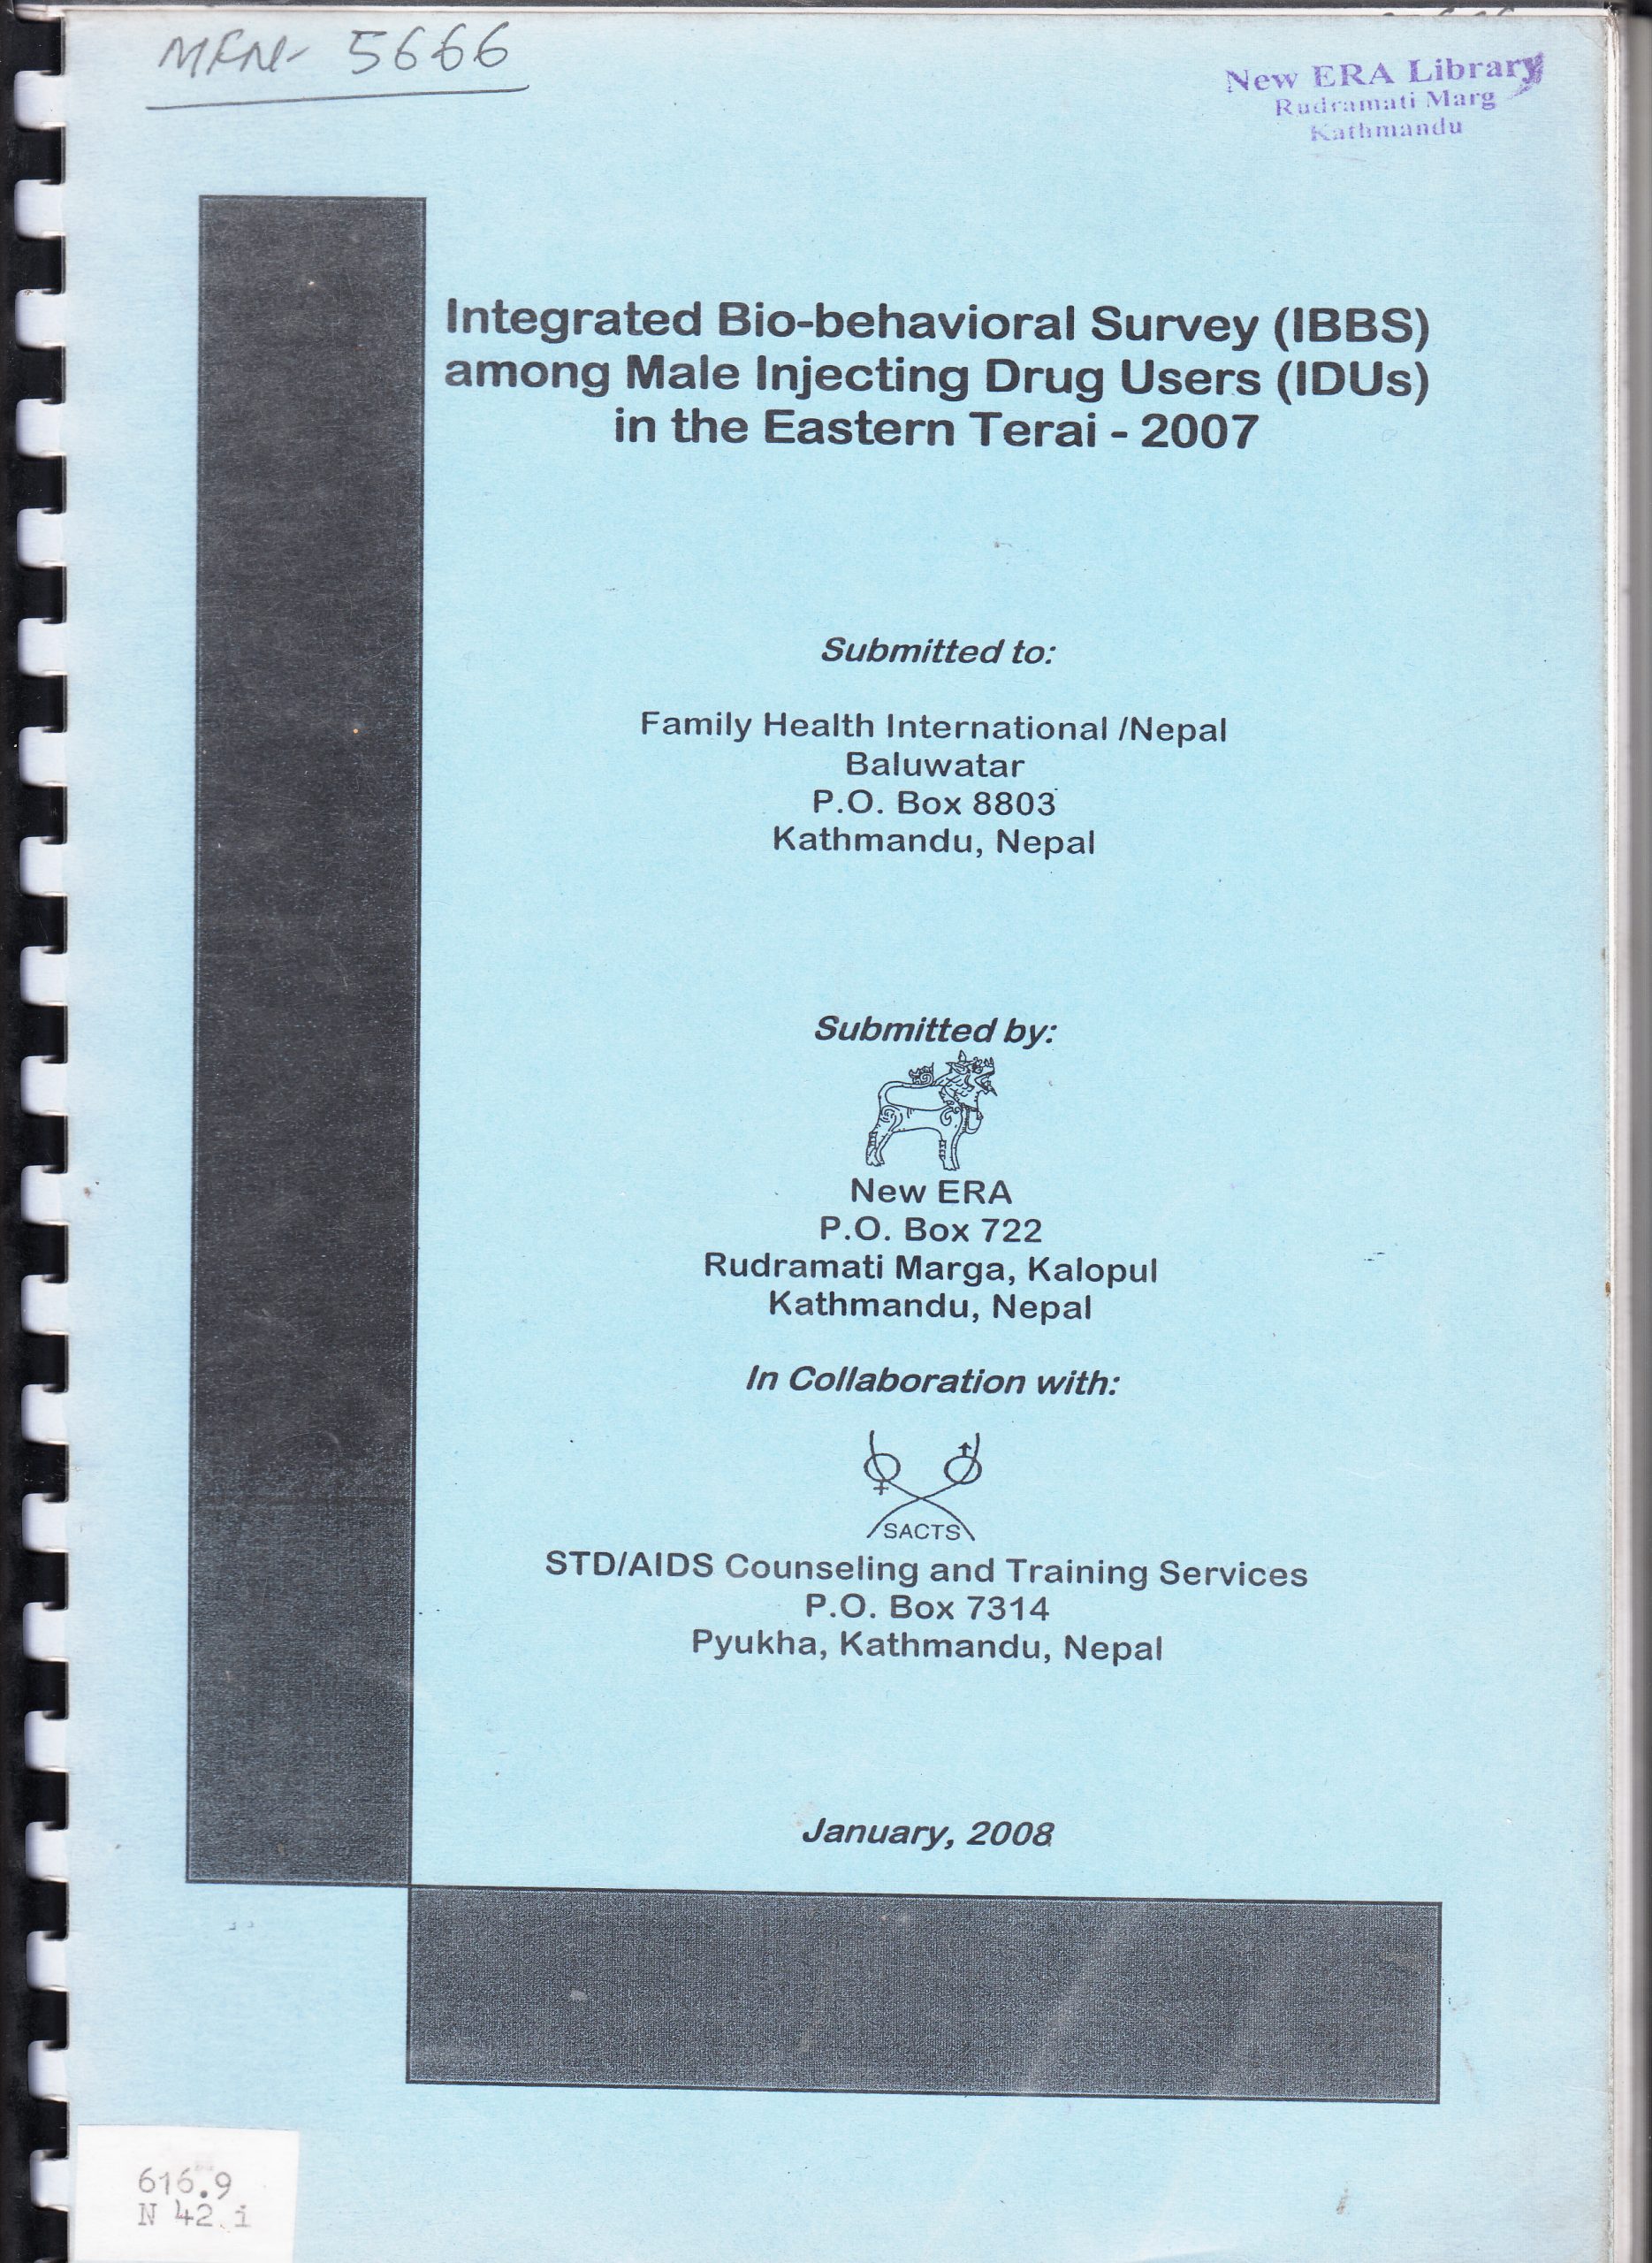 Integrated Bio-Behavioral Survey (IBBS) among Injecting Drug Users (IDUs) in Eastern Terai of Nepal – 2007